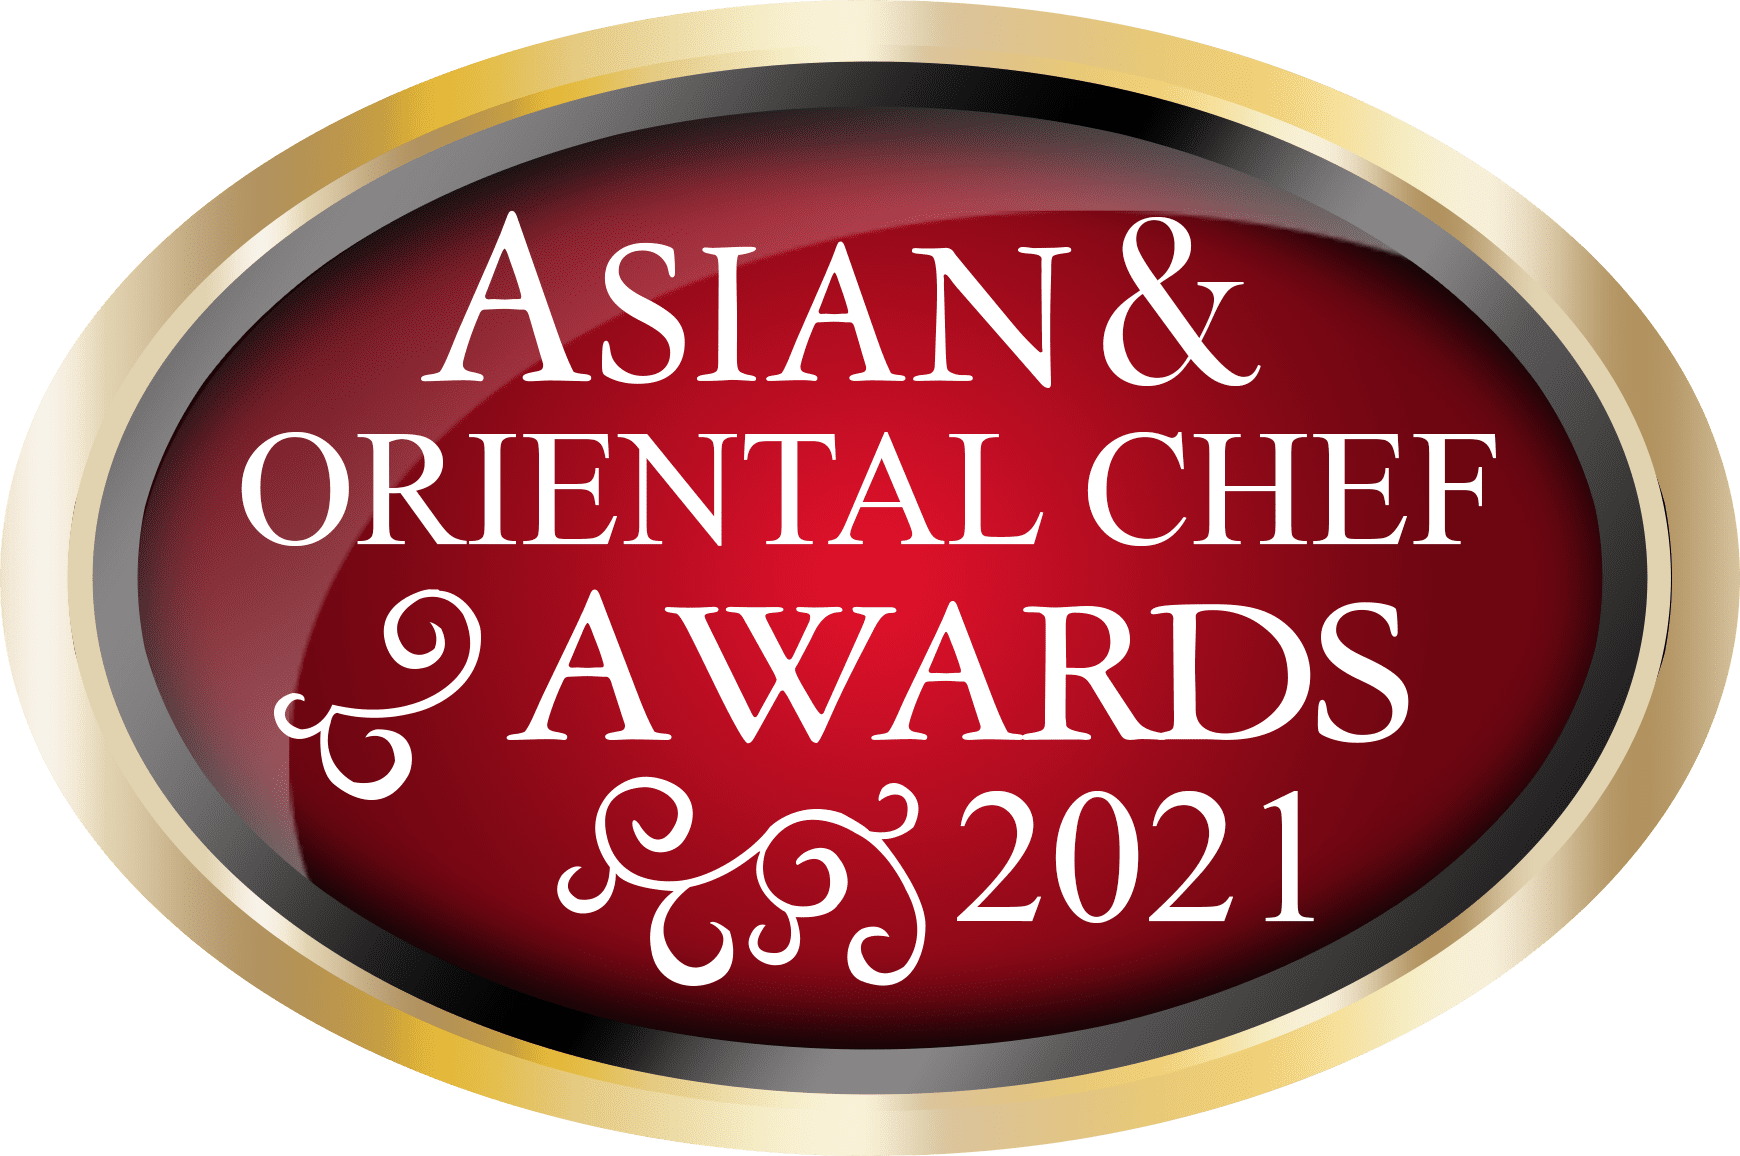 Asian Oriental Chef awards 2021